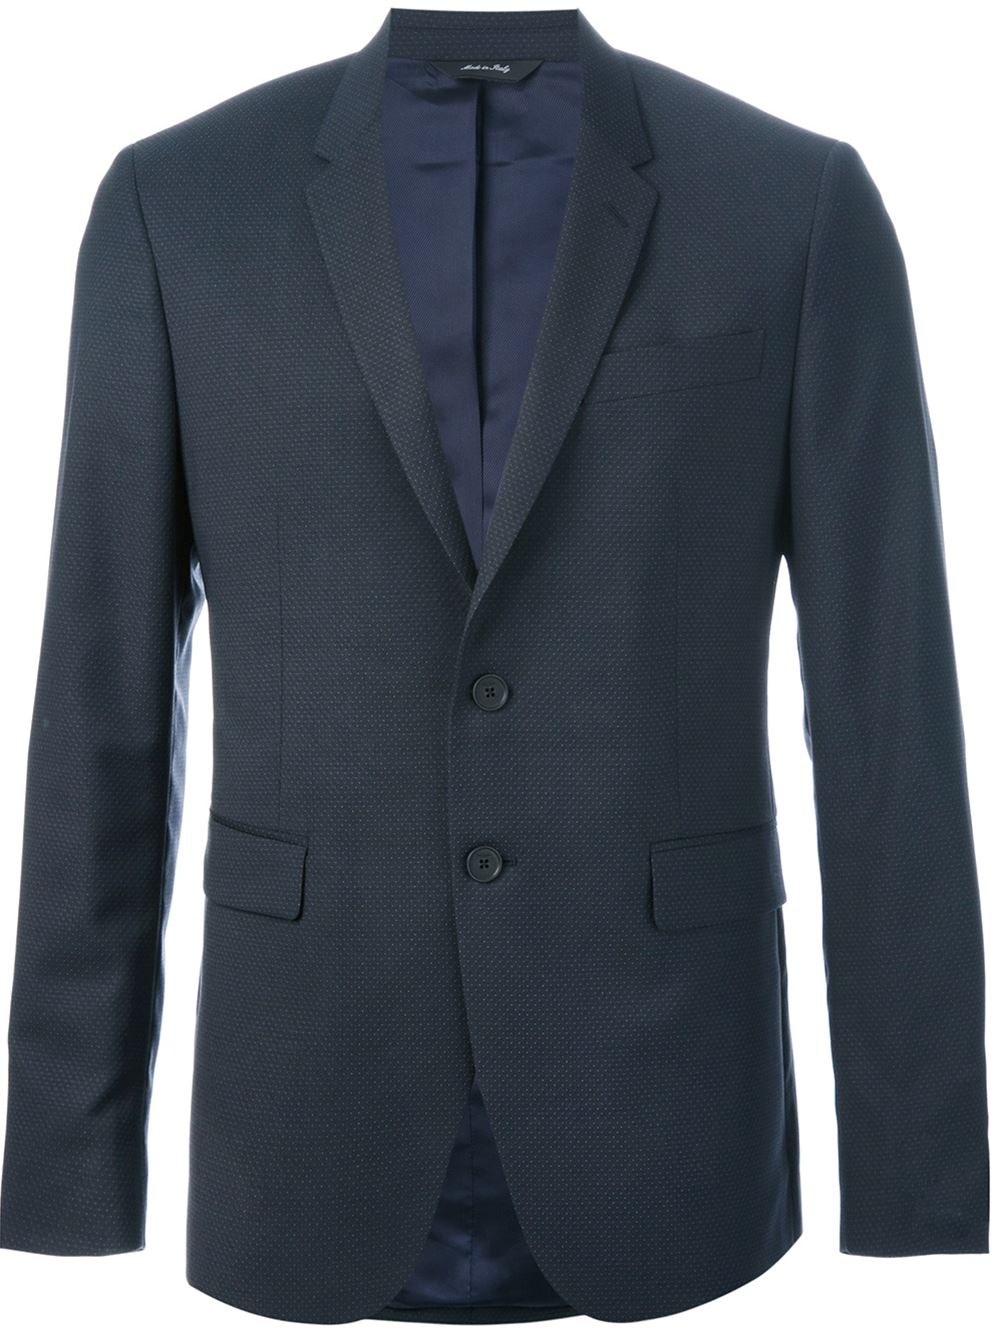 Paul Smith 'The Kensington' Suit in Blue for Men - Lyst